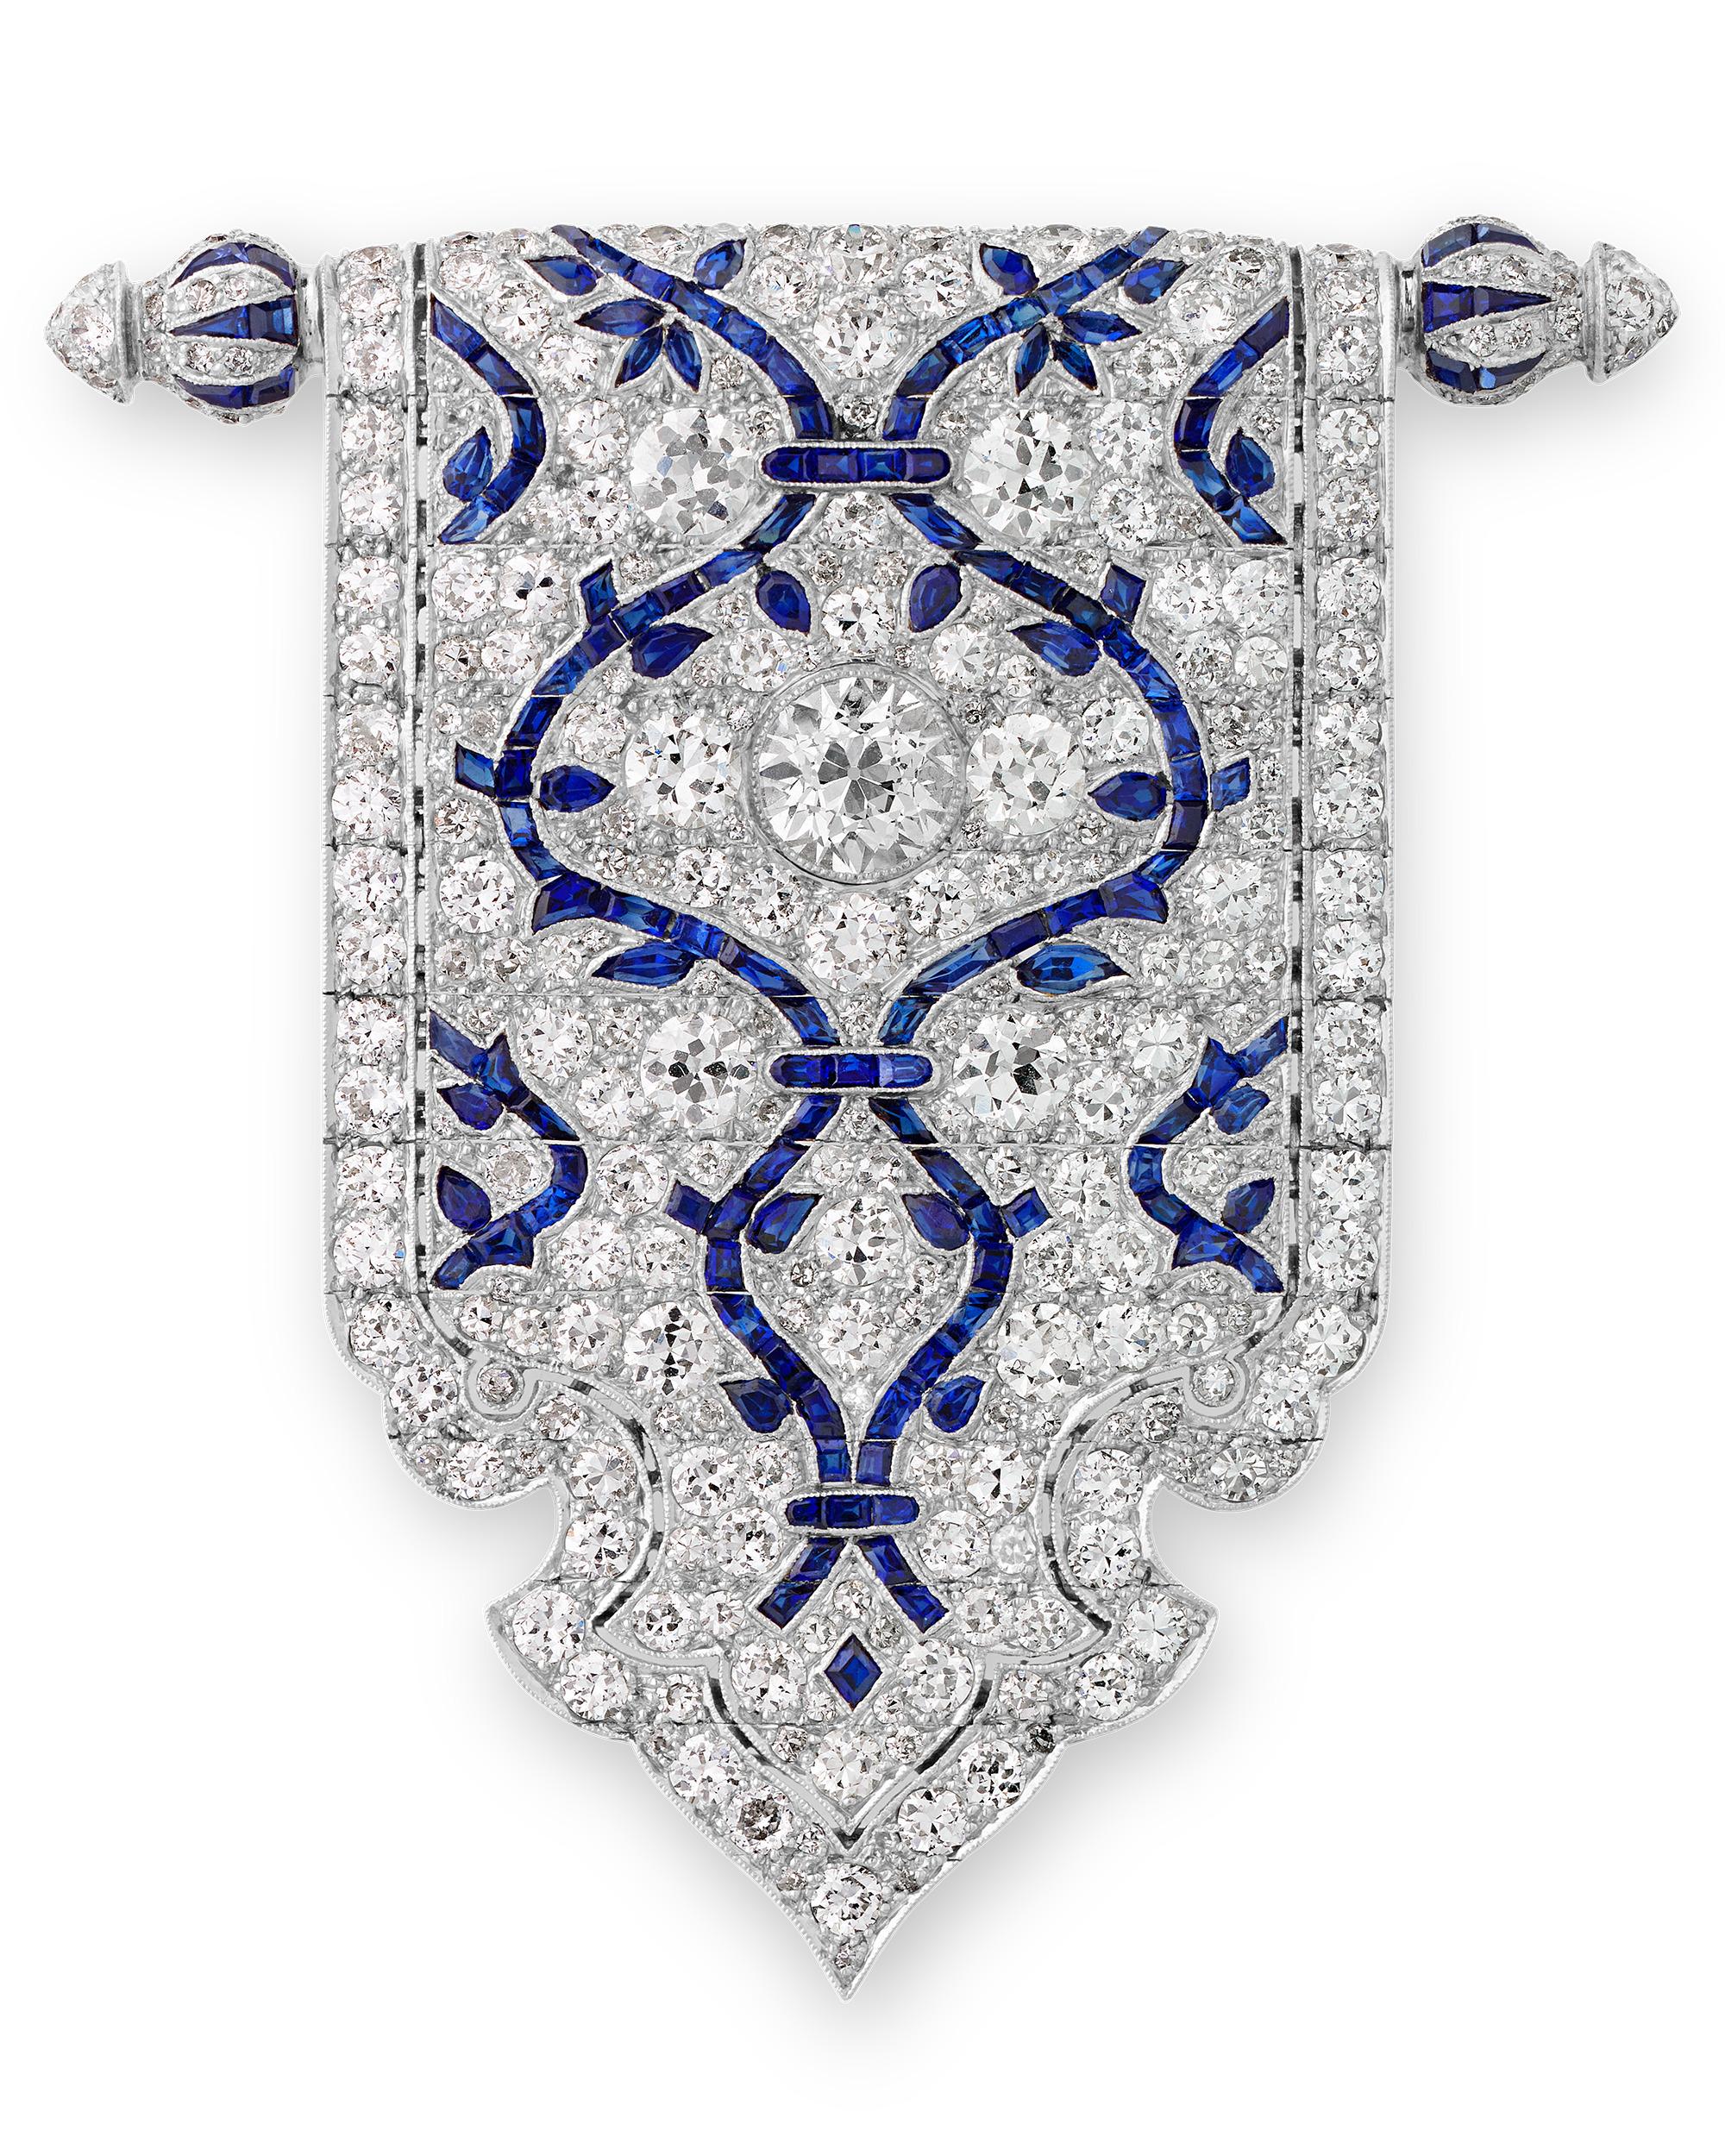 Old Mine Cut Art Deco Diamond And Sapphire Brooch